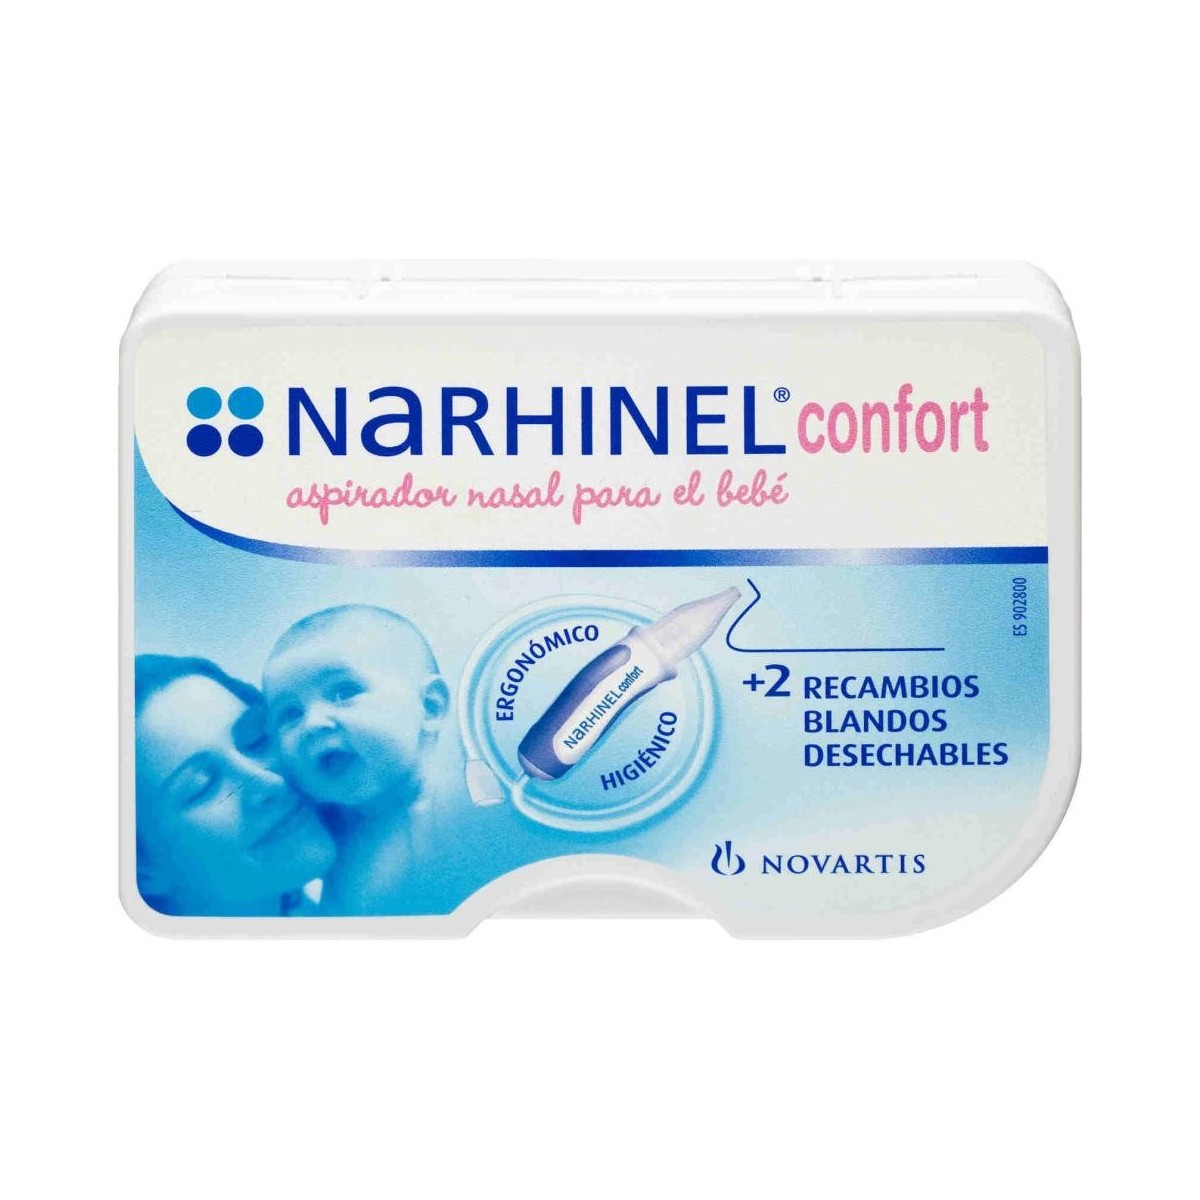 narhinel-aspirador-nasal-confort